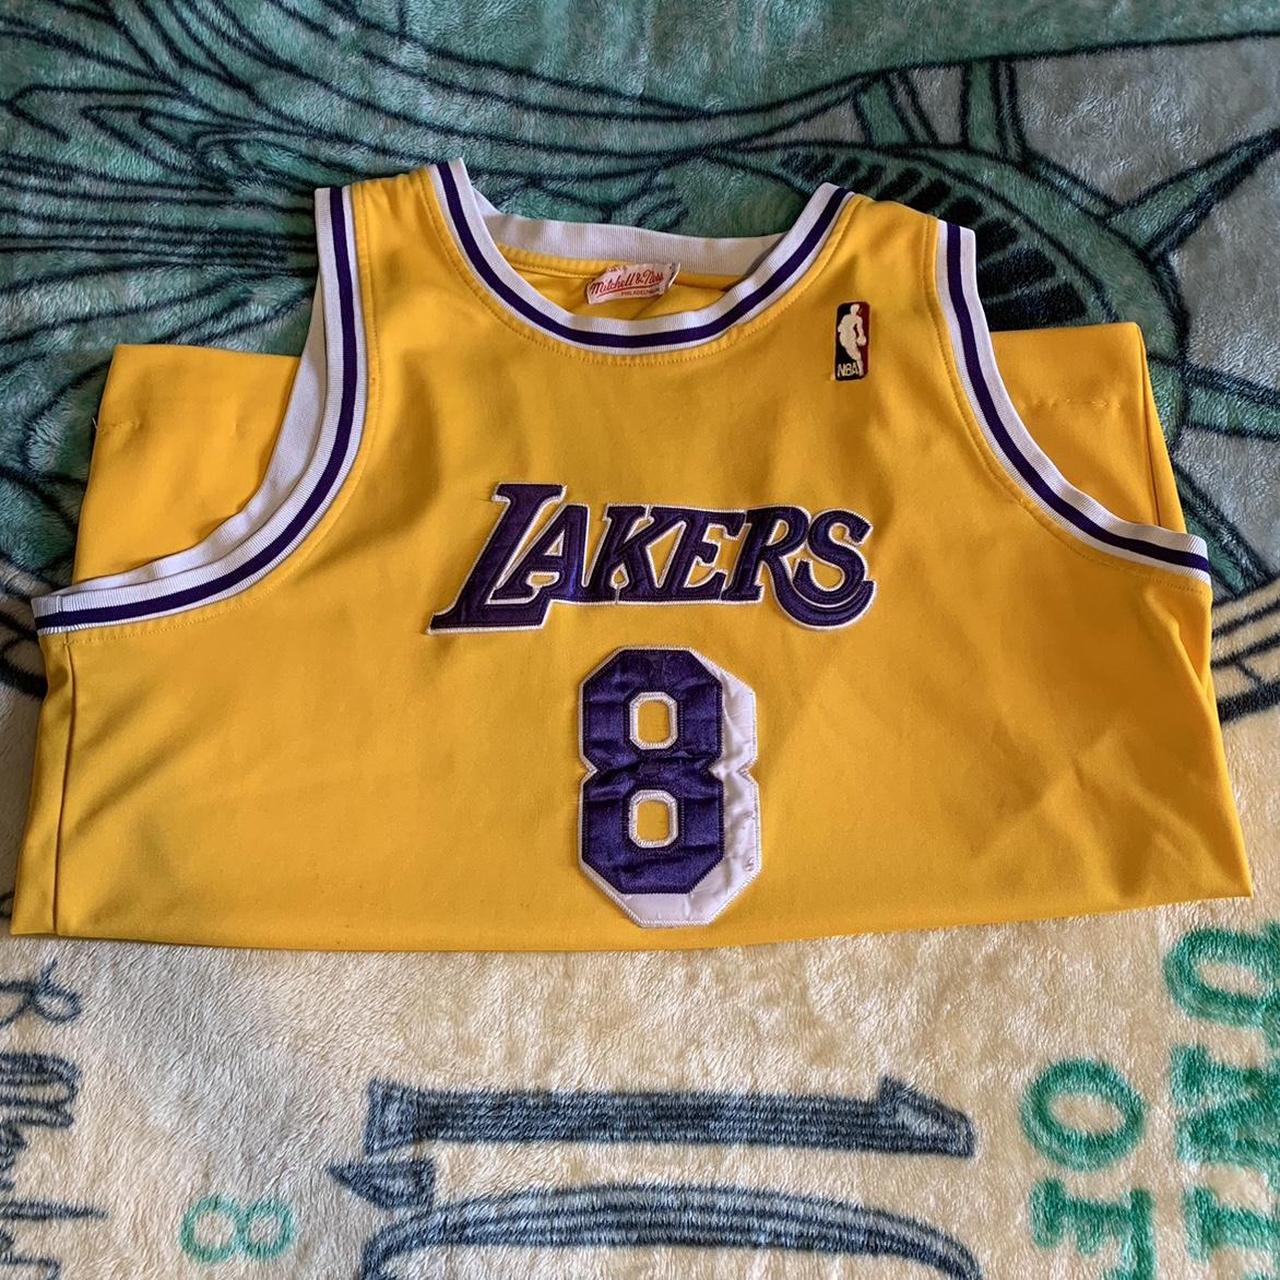 Reworked Vintage Kobe Bryant Basketball Jersey